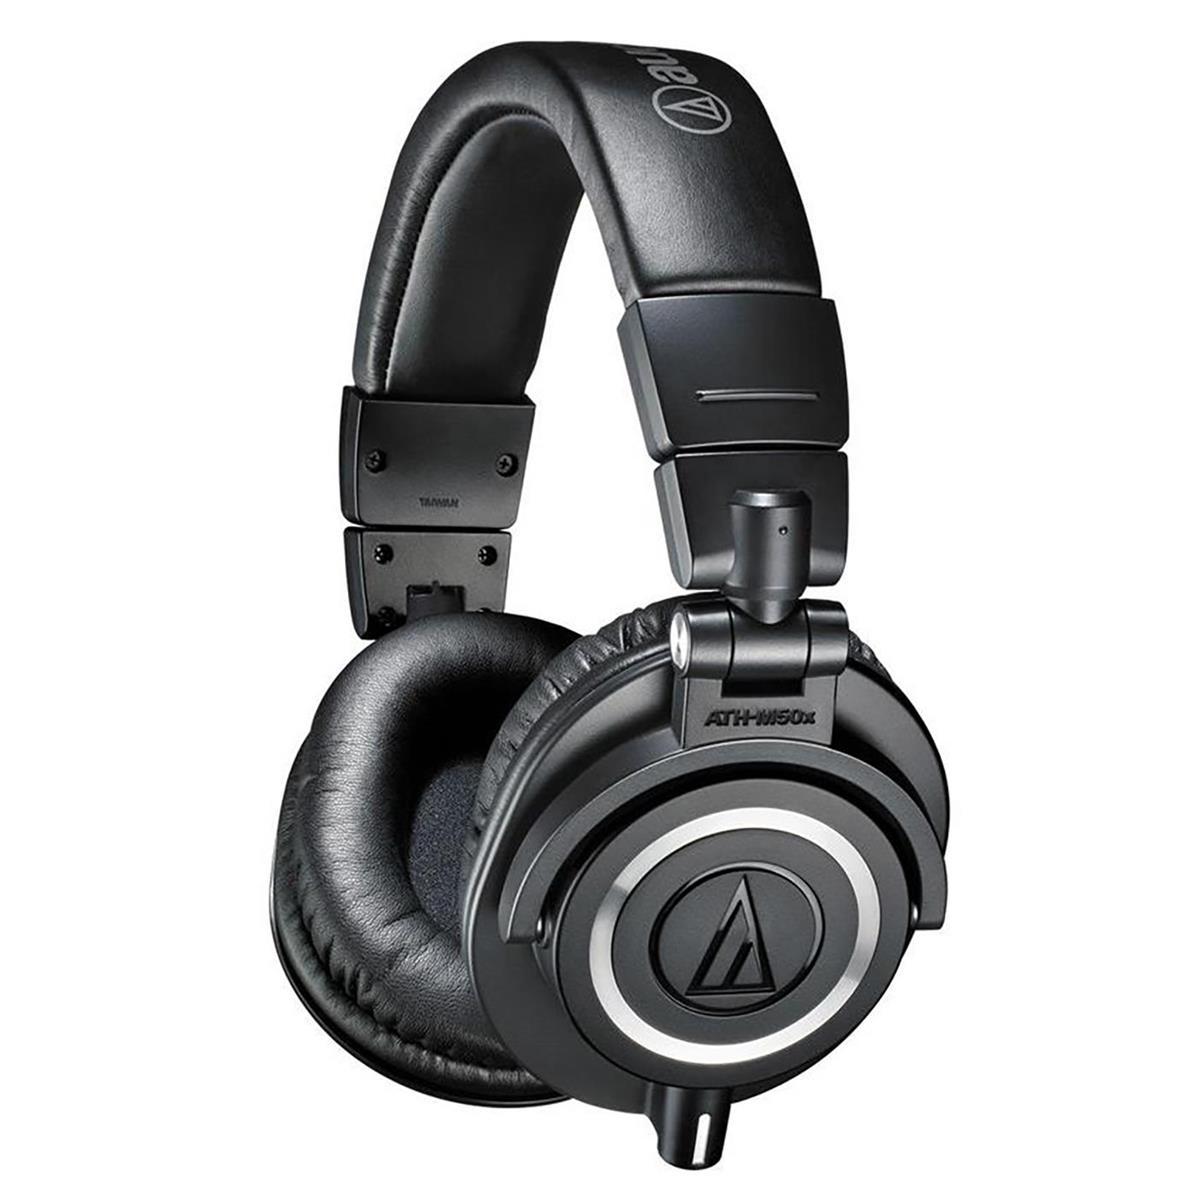 Professional Monitor Headphones - Black - Audio-Technica ATH-M50X